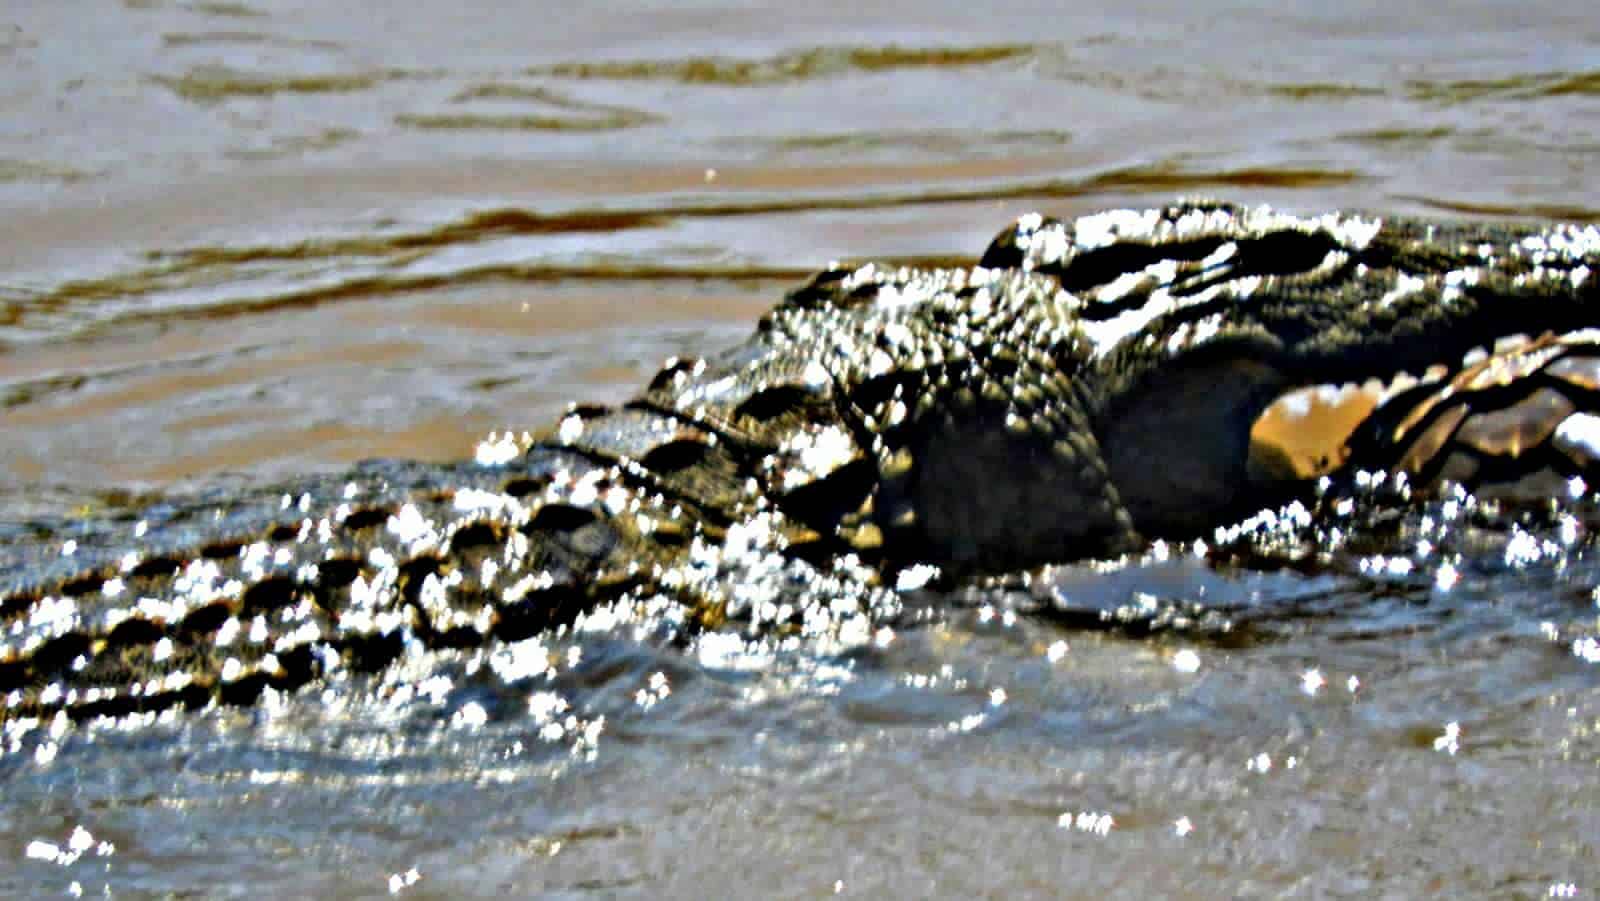 Crocodile with pangolin kill